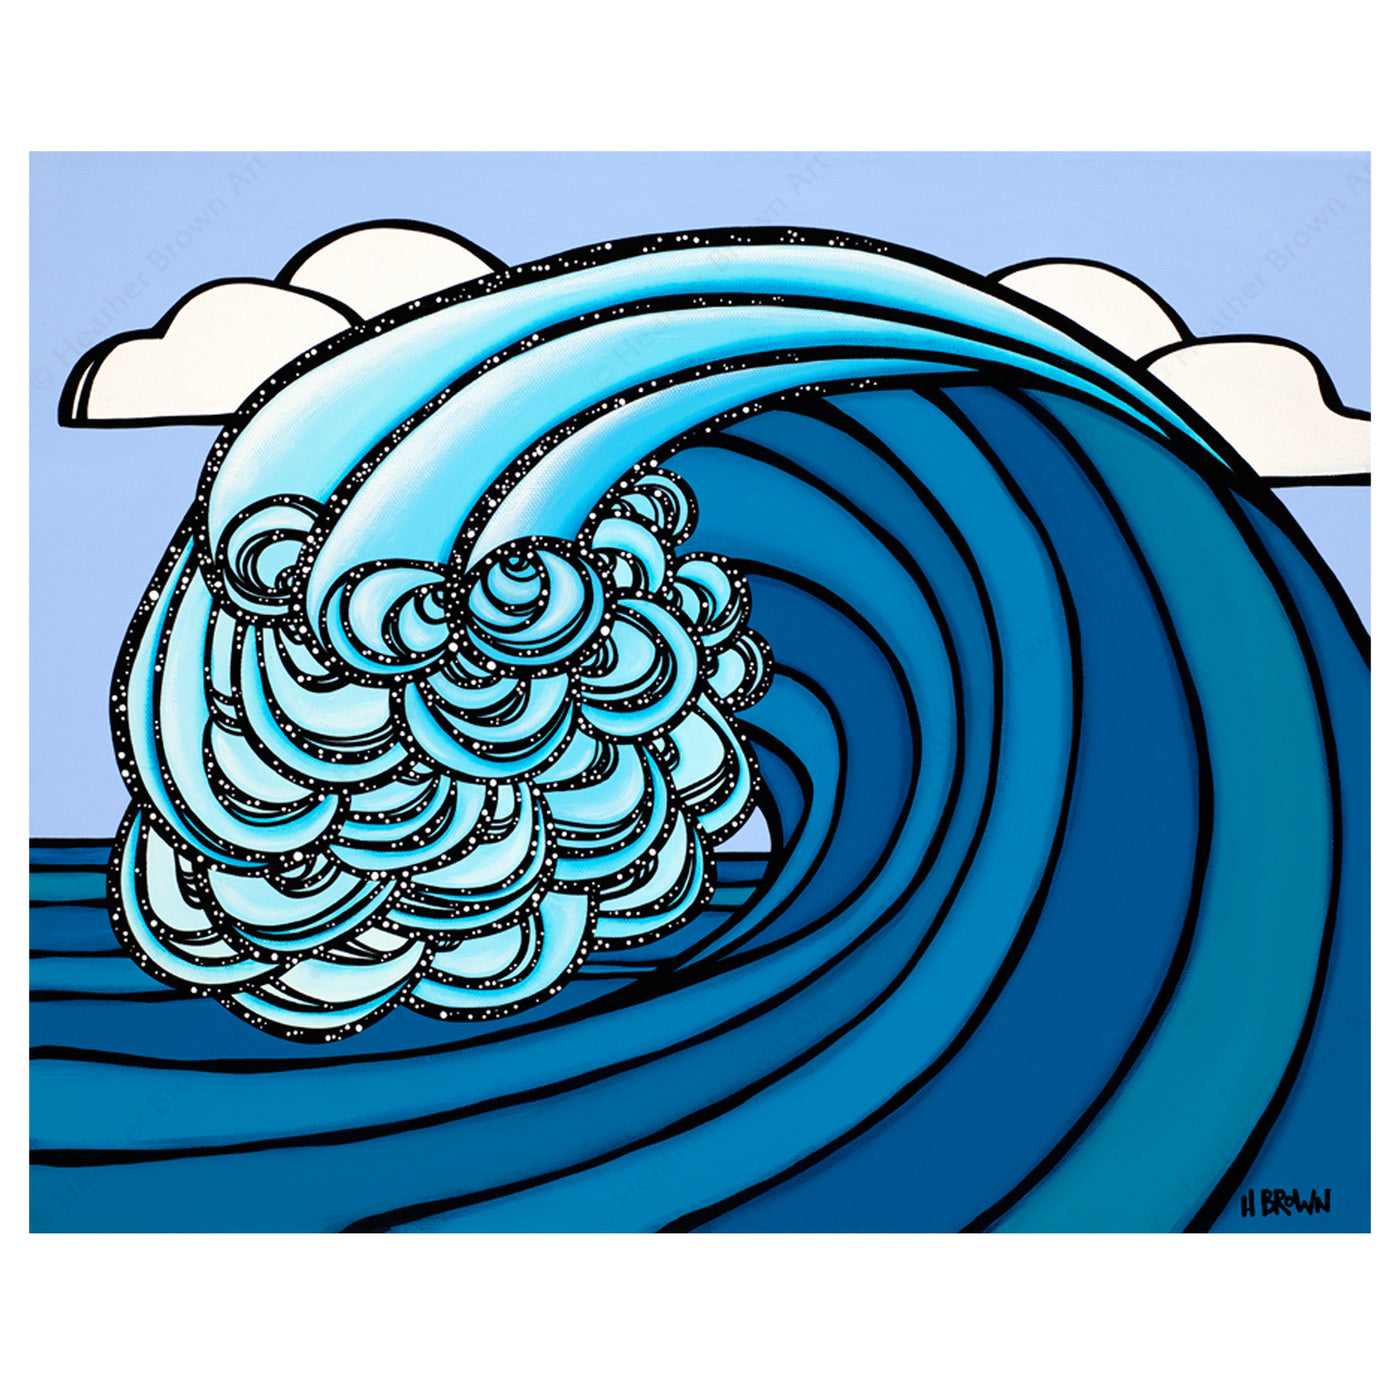 Canvas giclée print of a wave artwork by Hawaii artist Heather Brown